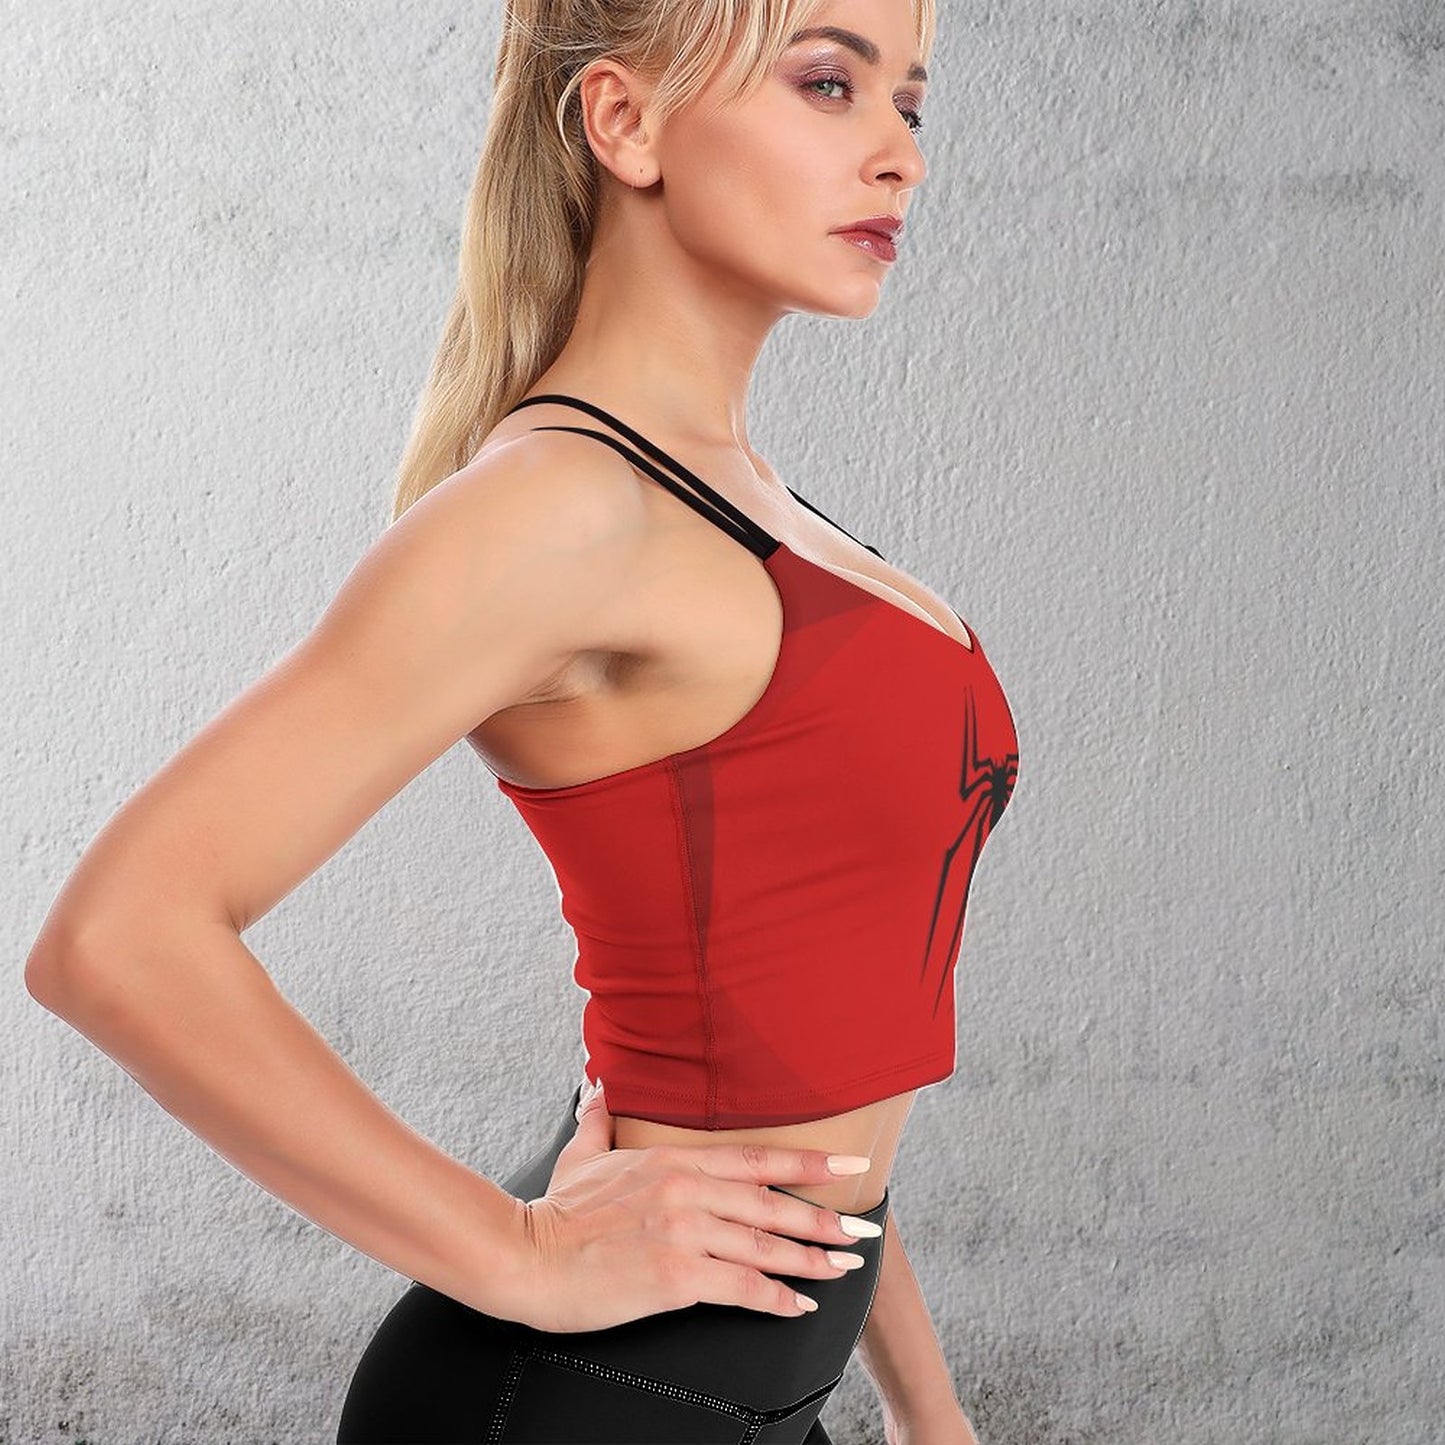 Online Custom Sportswear for Women Yoga Top Red Hero Spider